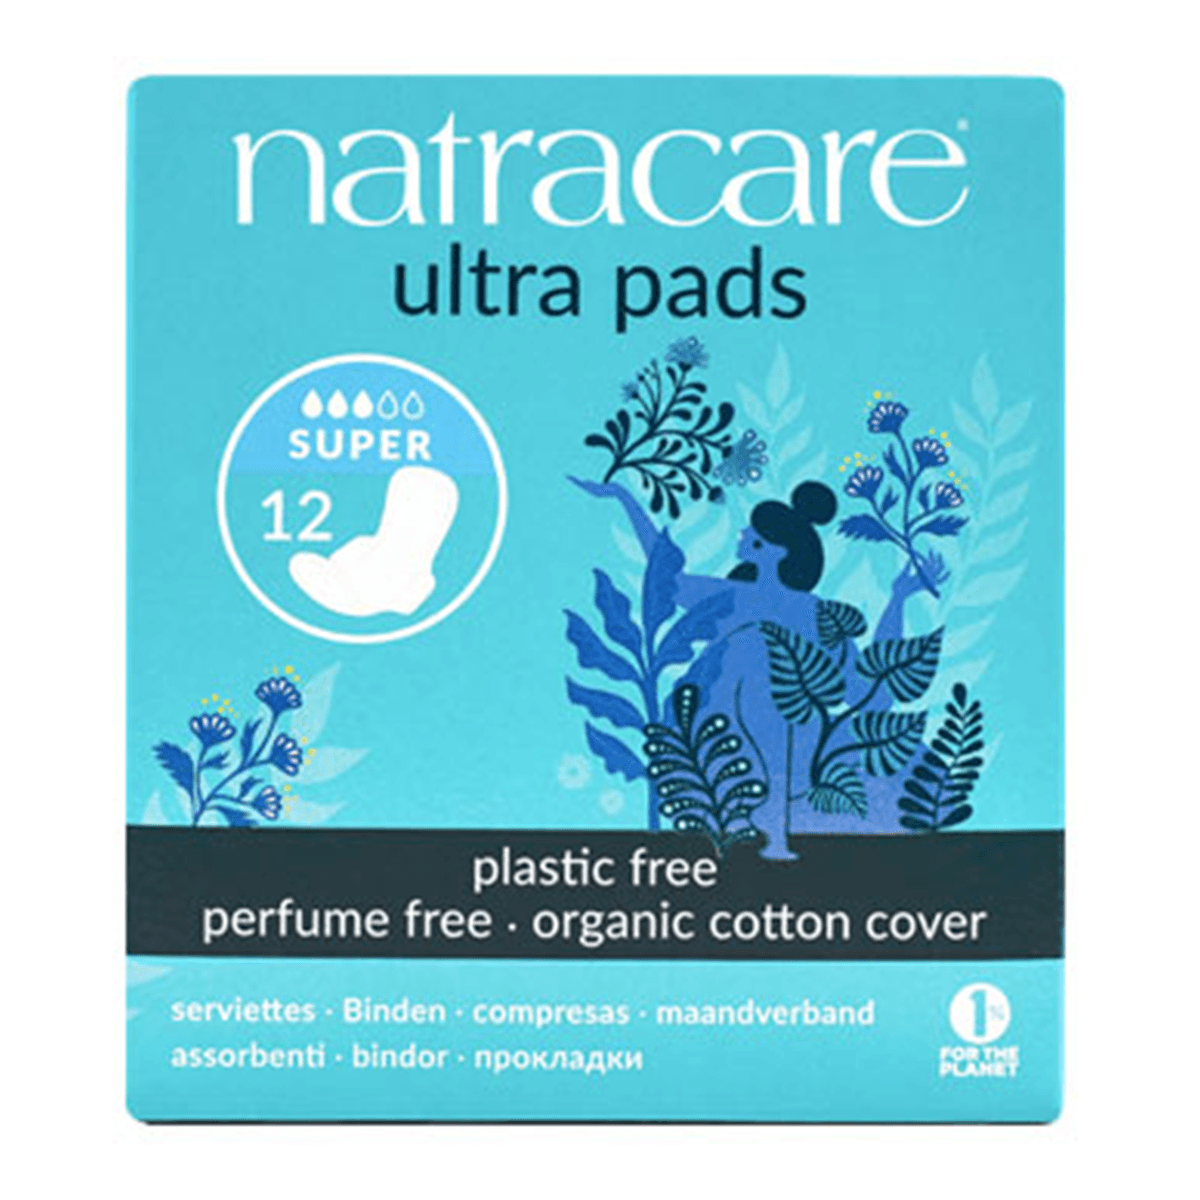 NatraCare Organic & Natural Ultra Pads Super 12 Pads Feminine Sanitary Supplies at Village Vitamin Store